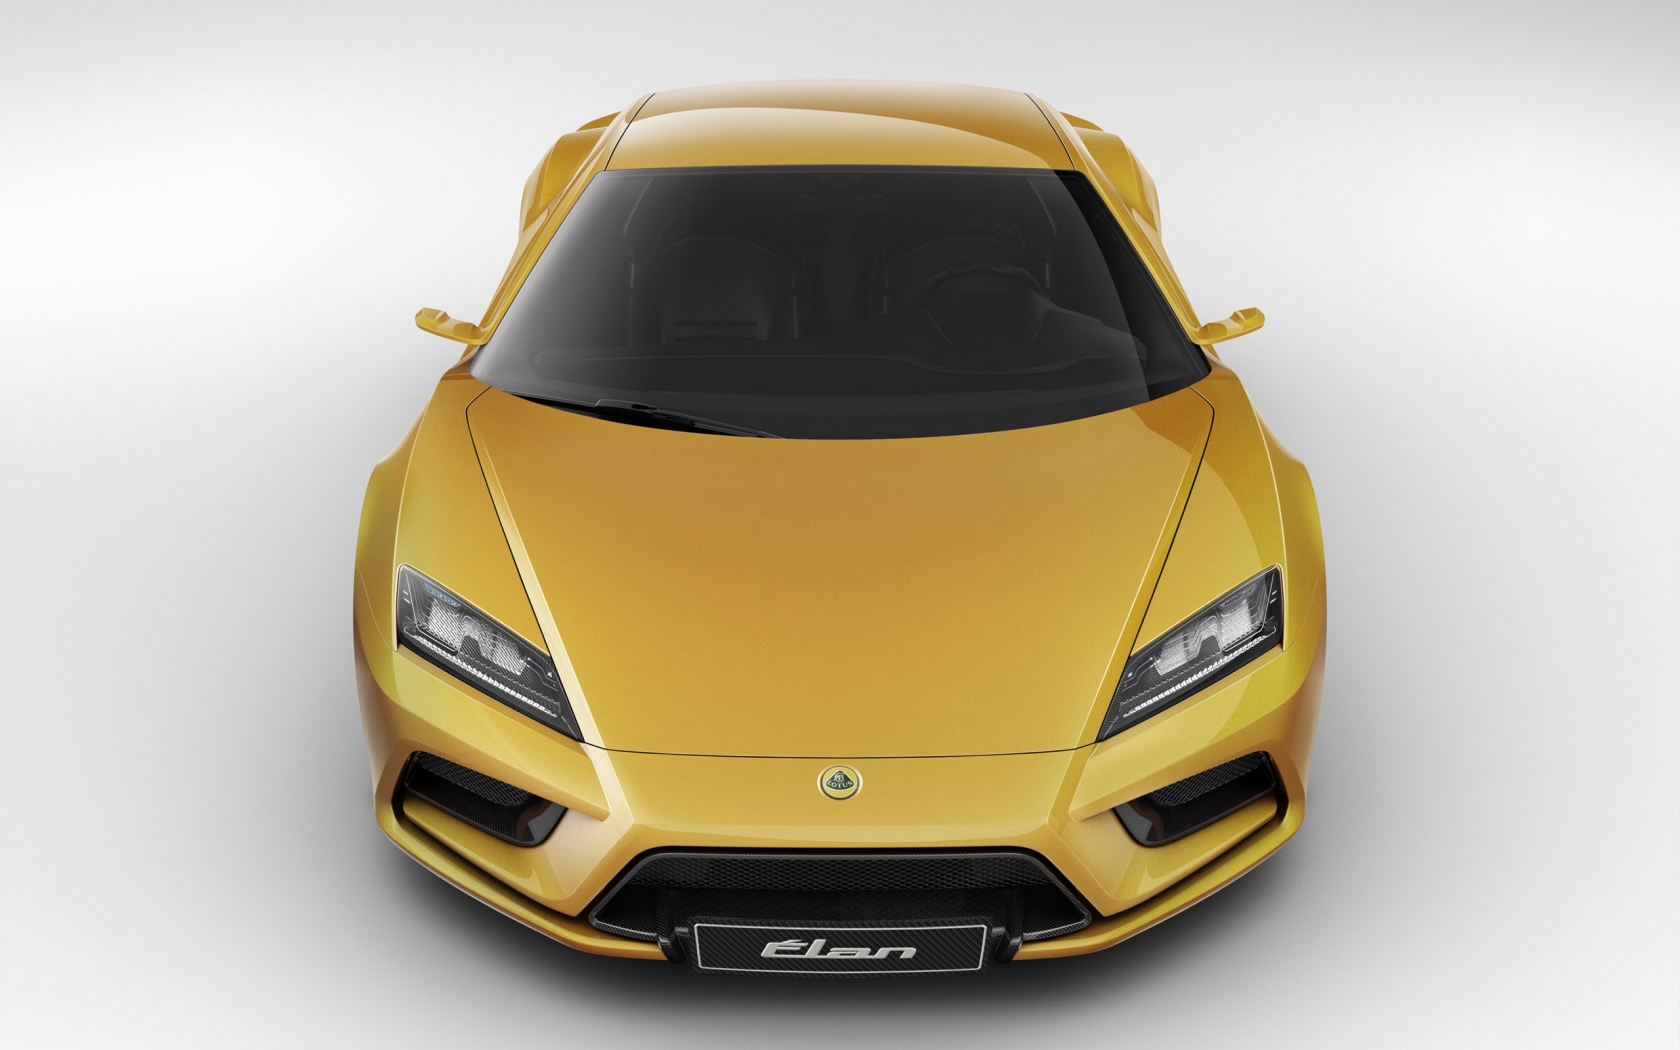 2013 Lotus Elan Studio Front for 1680 x 1050 widescreen resolution